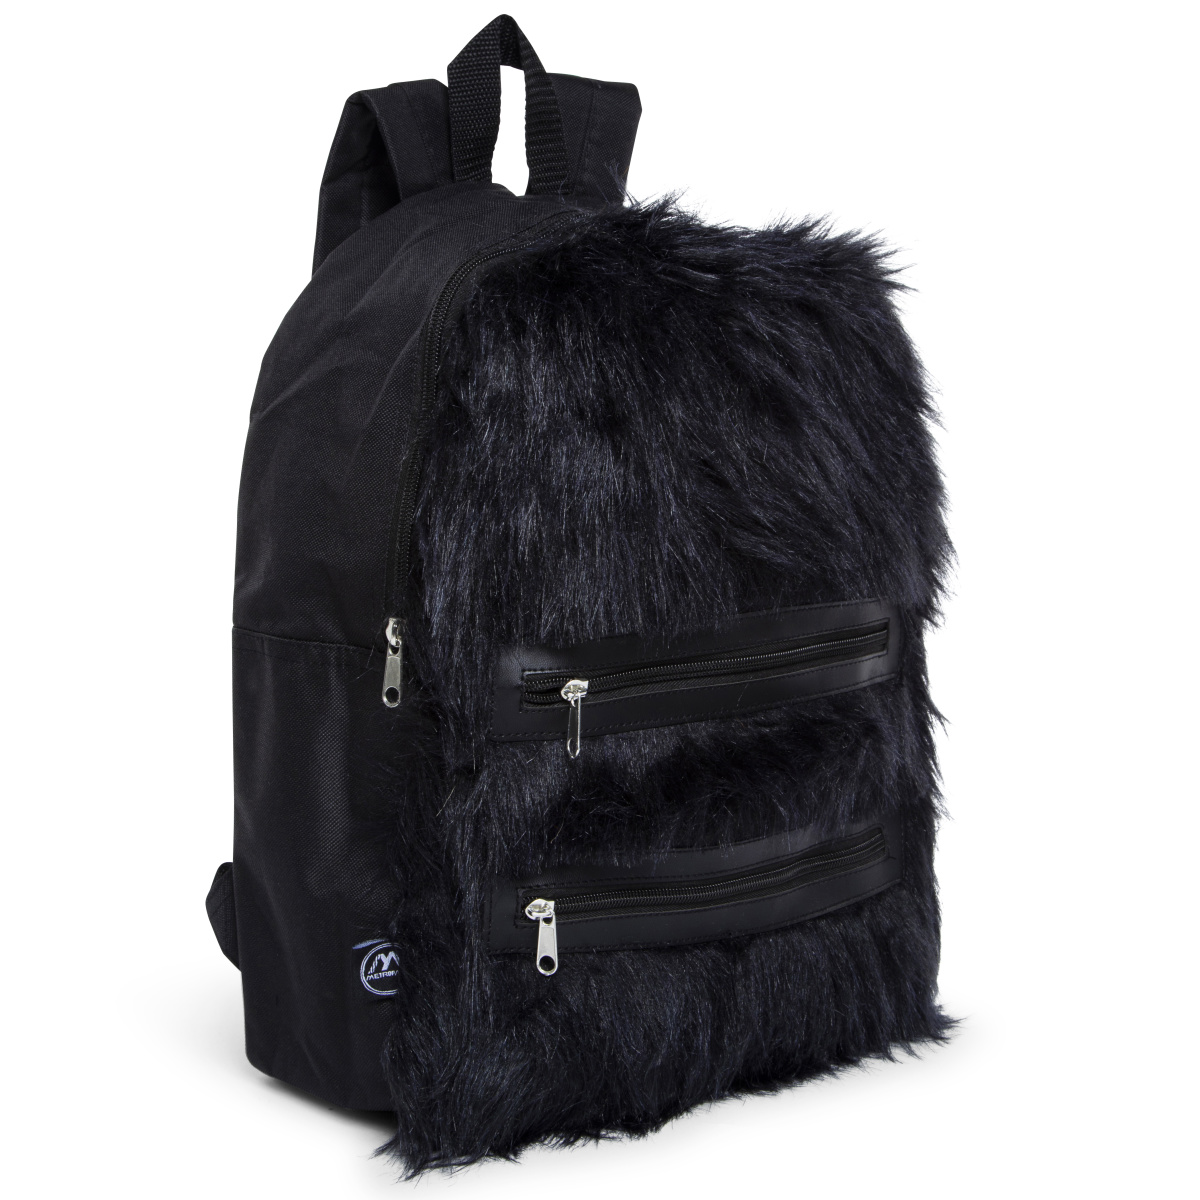 Black Furry Backpack 16in